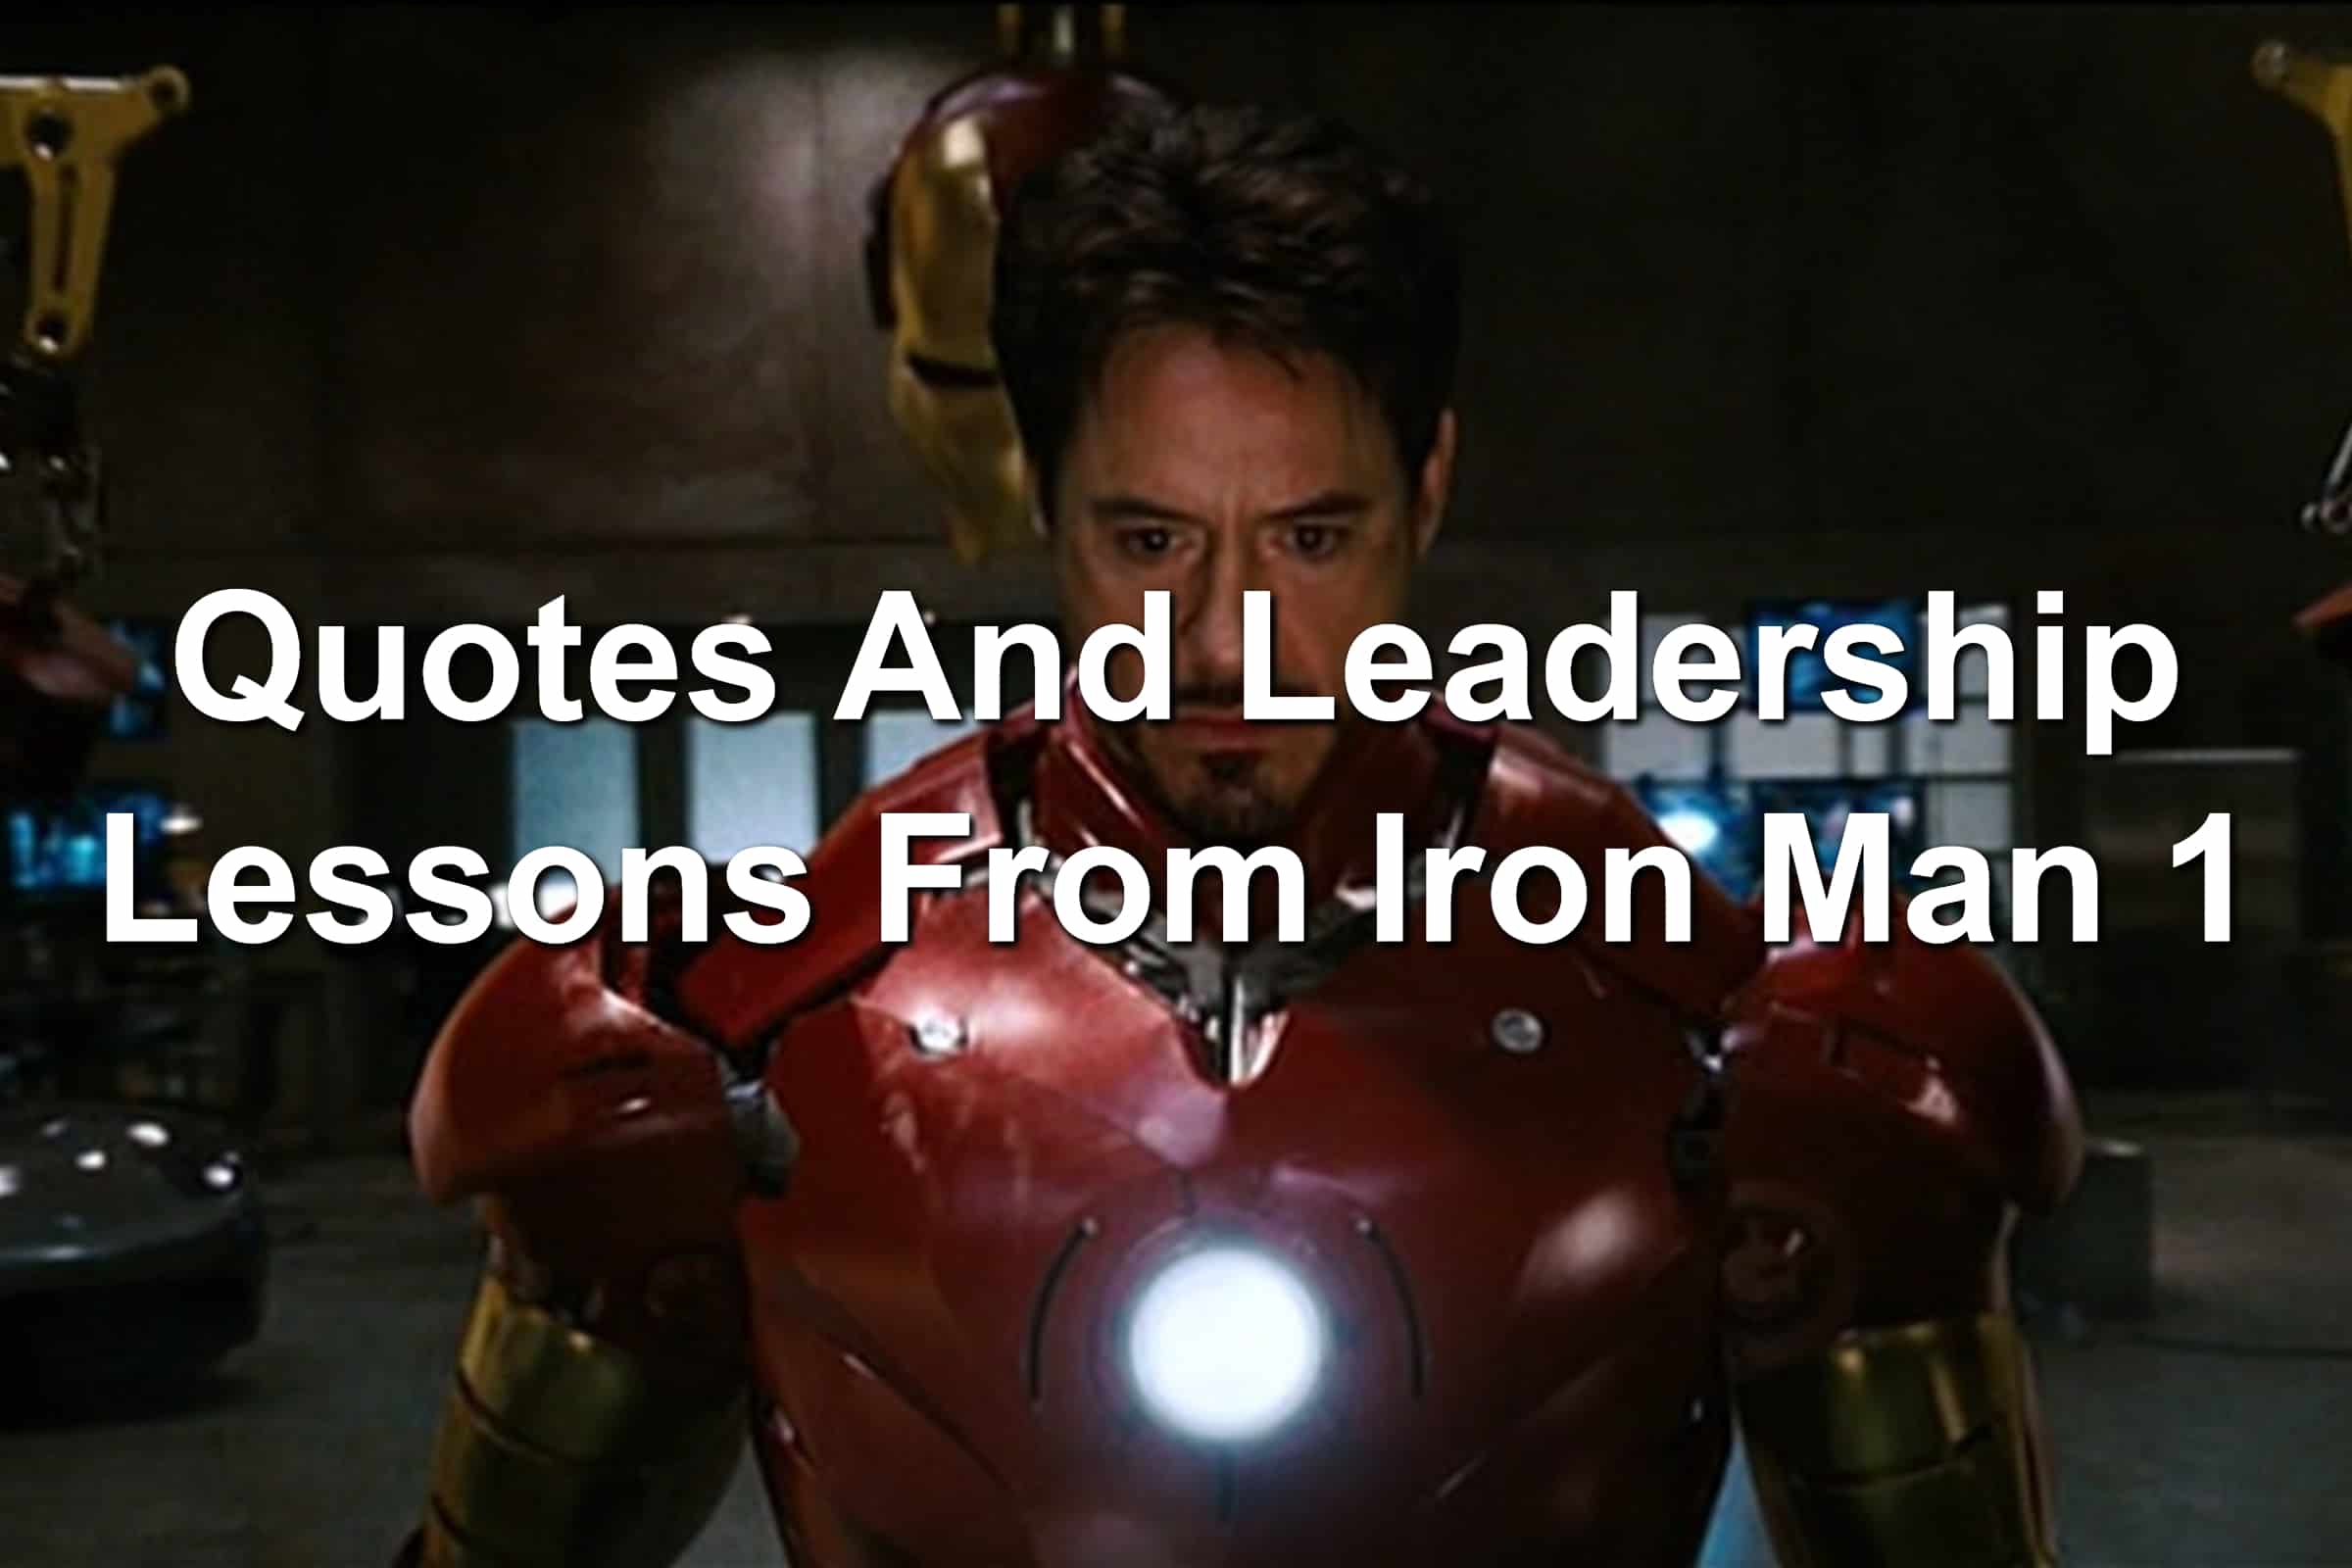 Robert Downey Junior as Iron Man in Iron Man 1